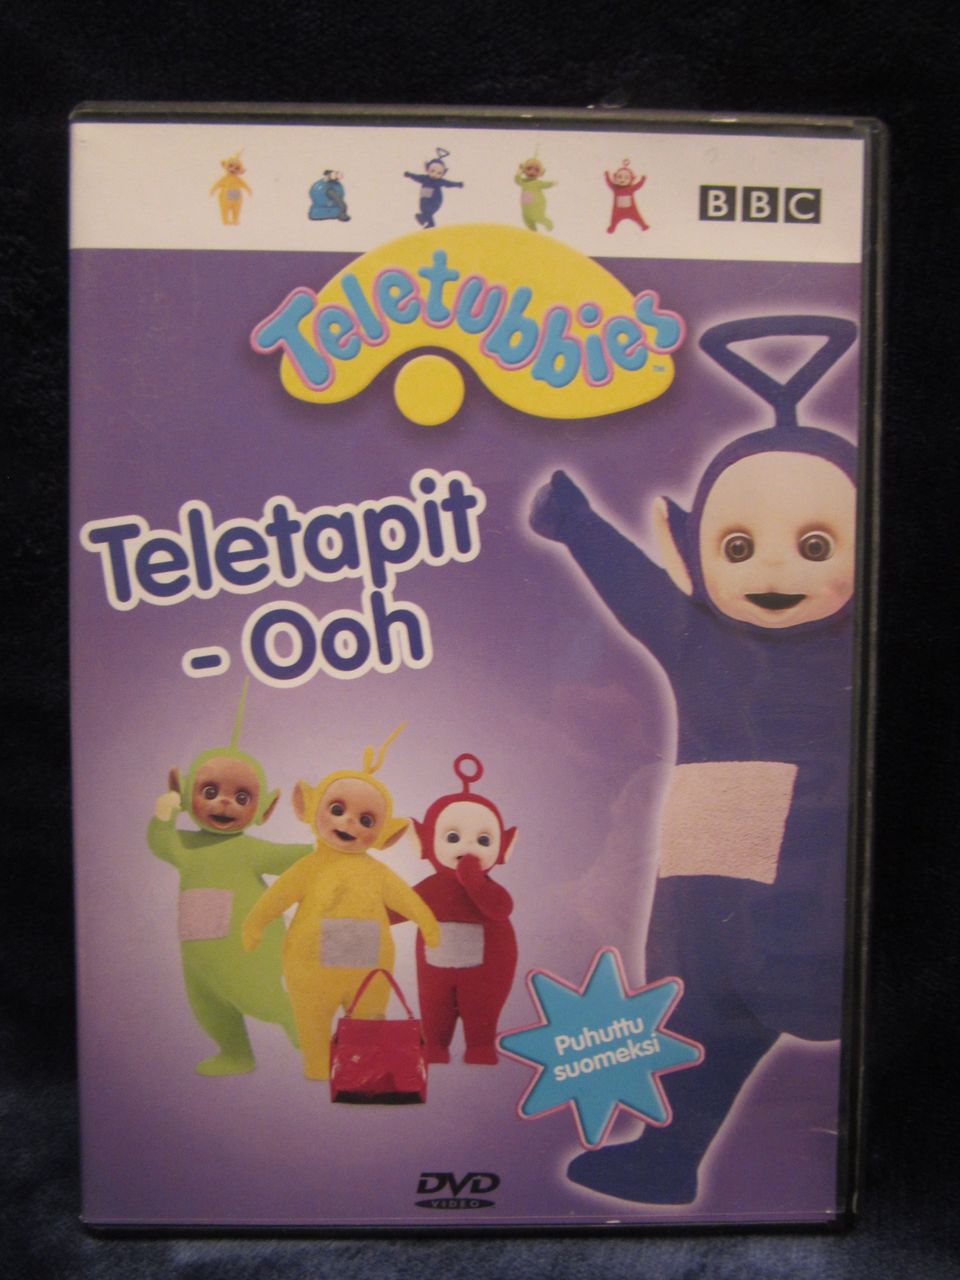 Teletapit  - Ooh dvd